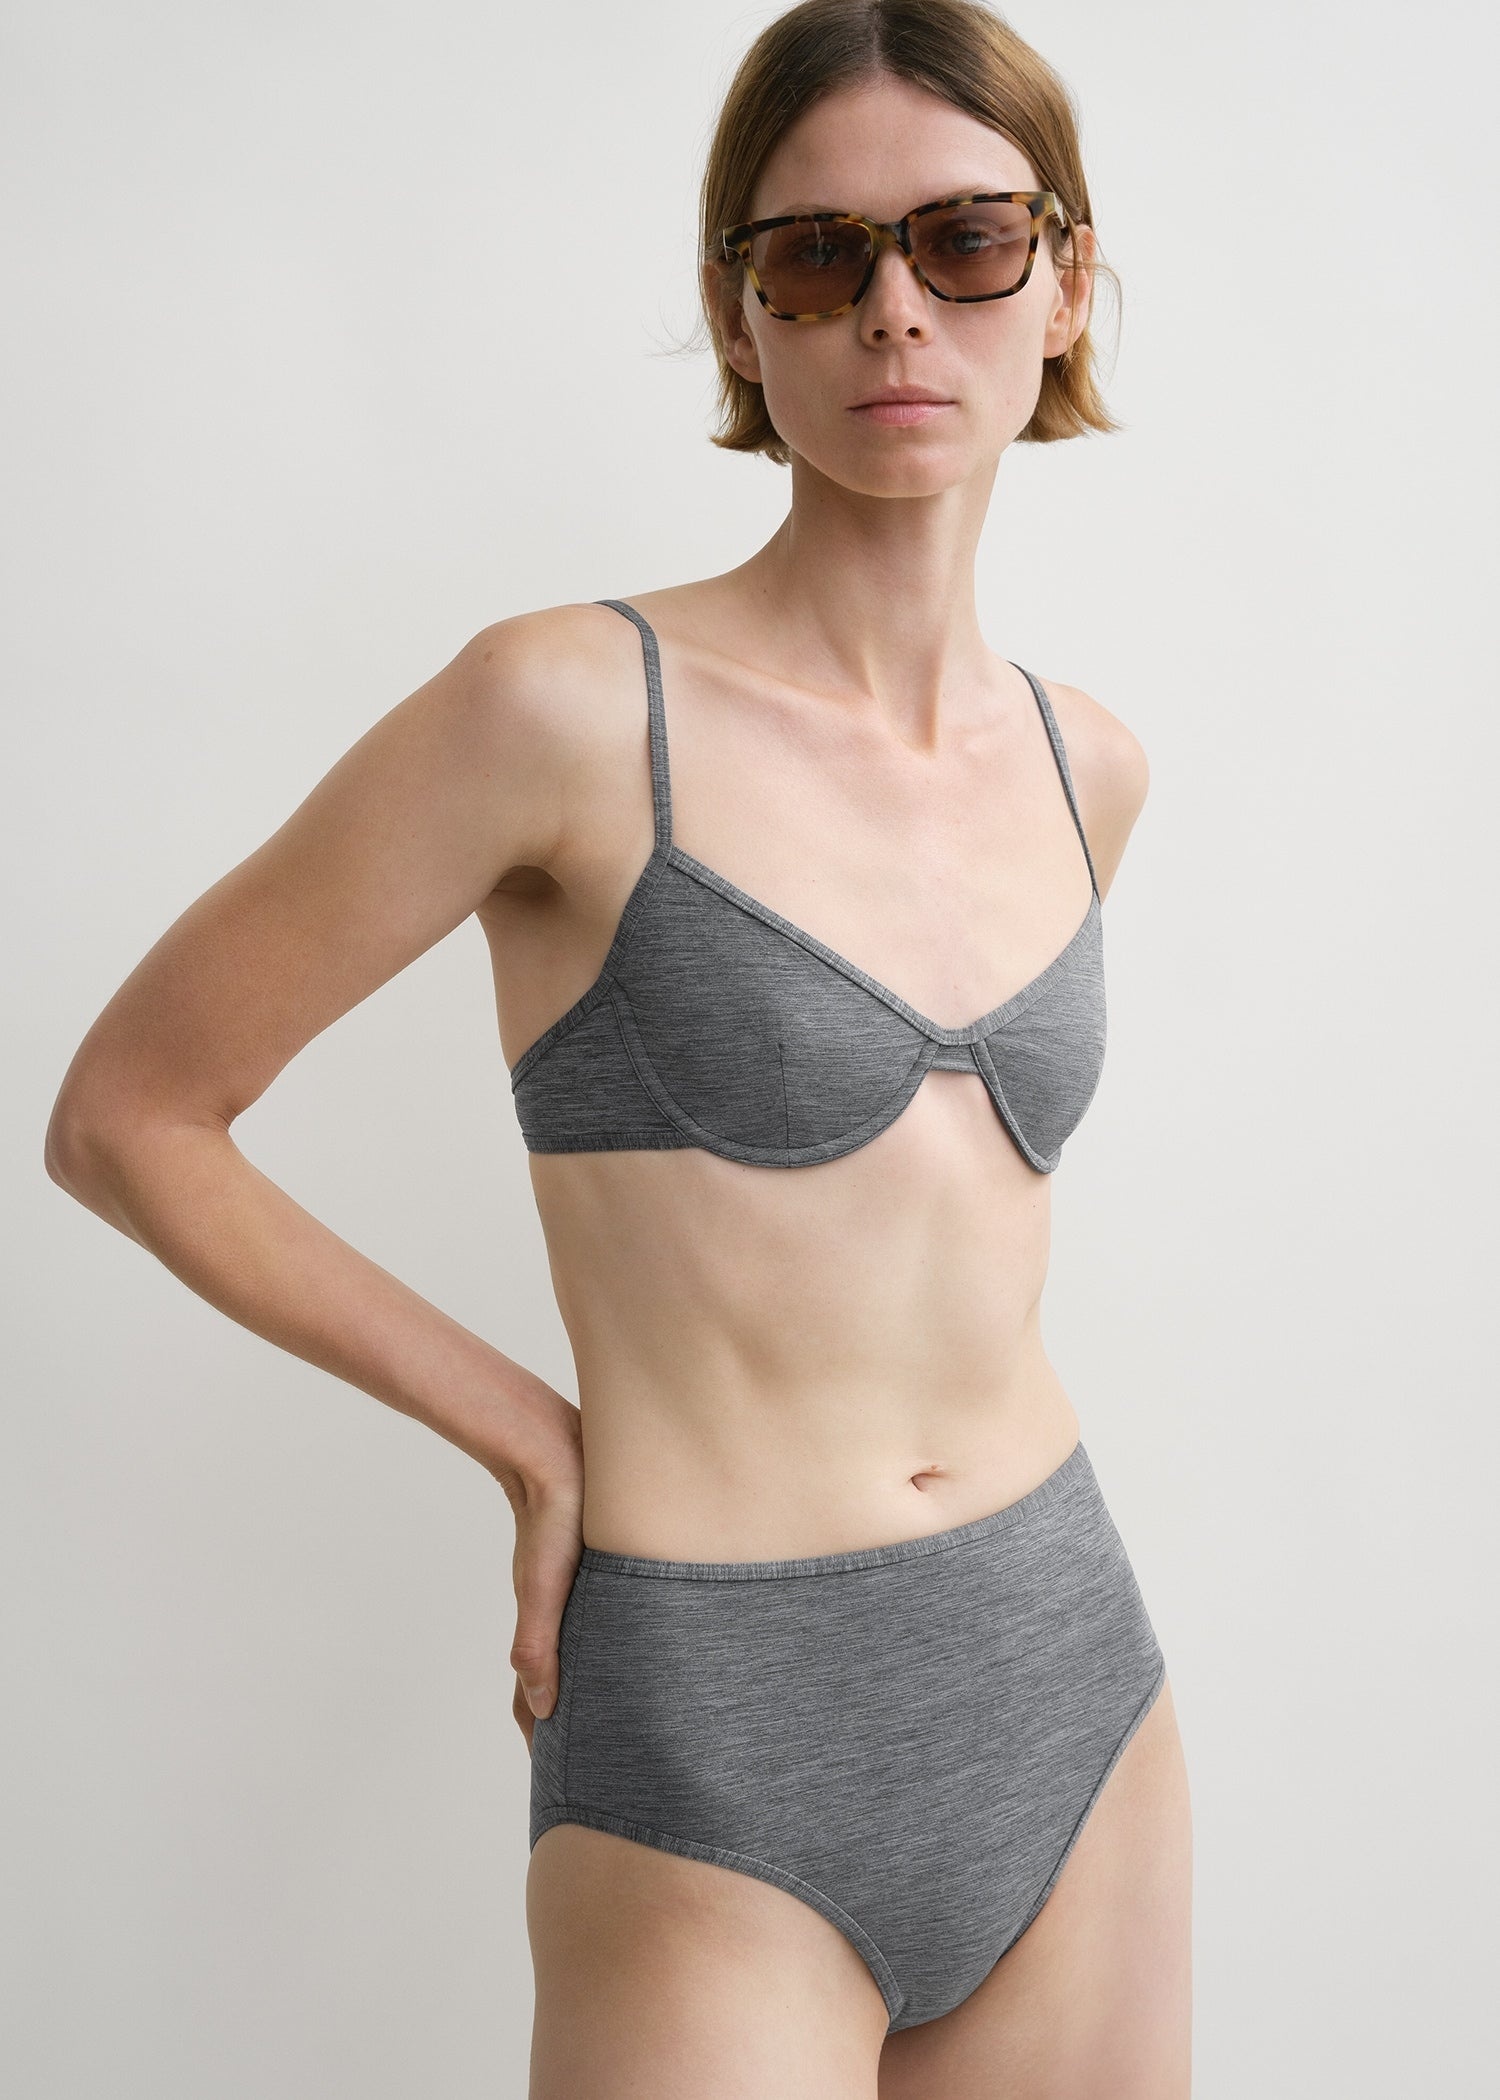 Half-cup bikini top grey melange - 6